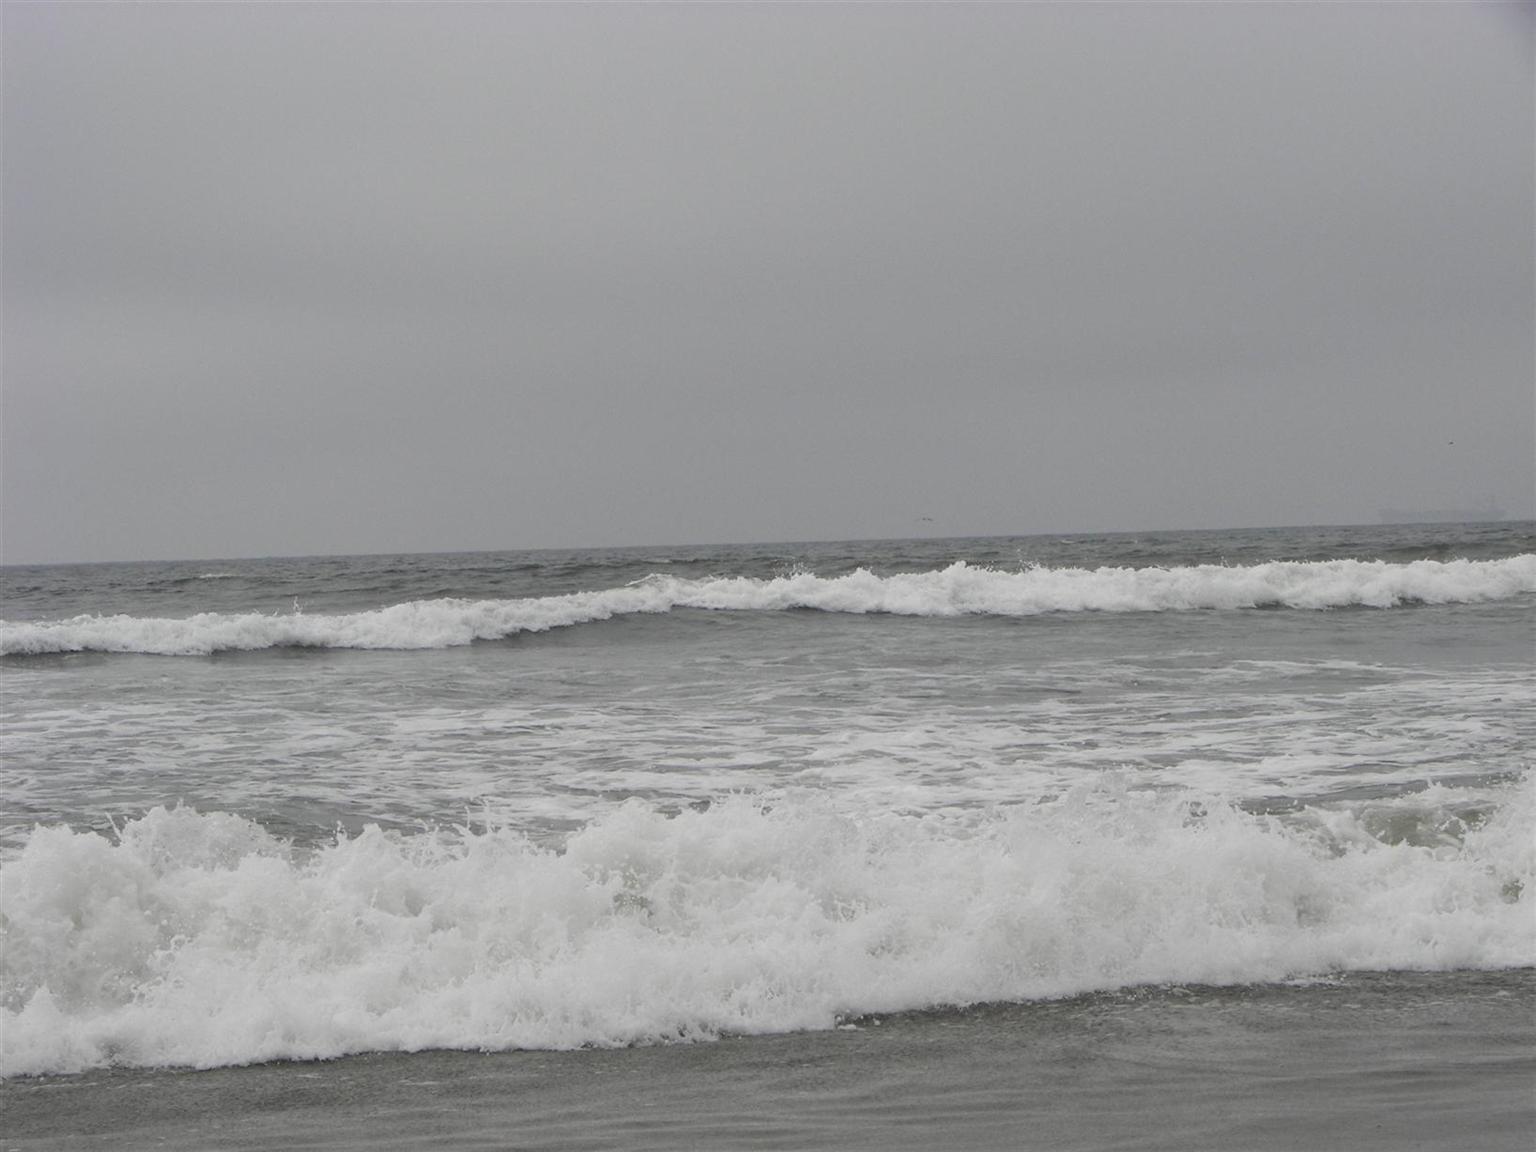 Pacific Ocean near San Francisco